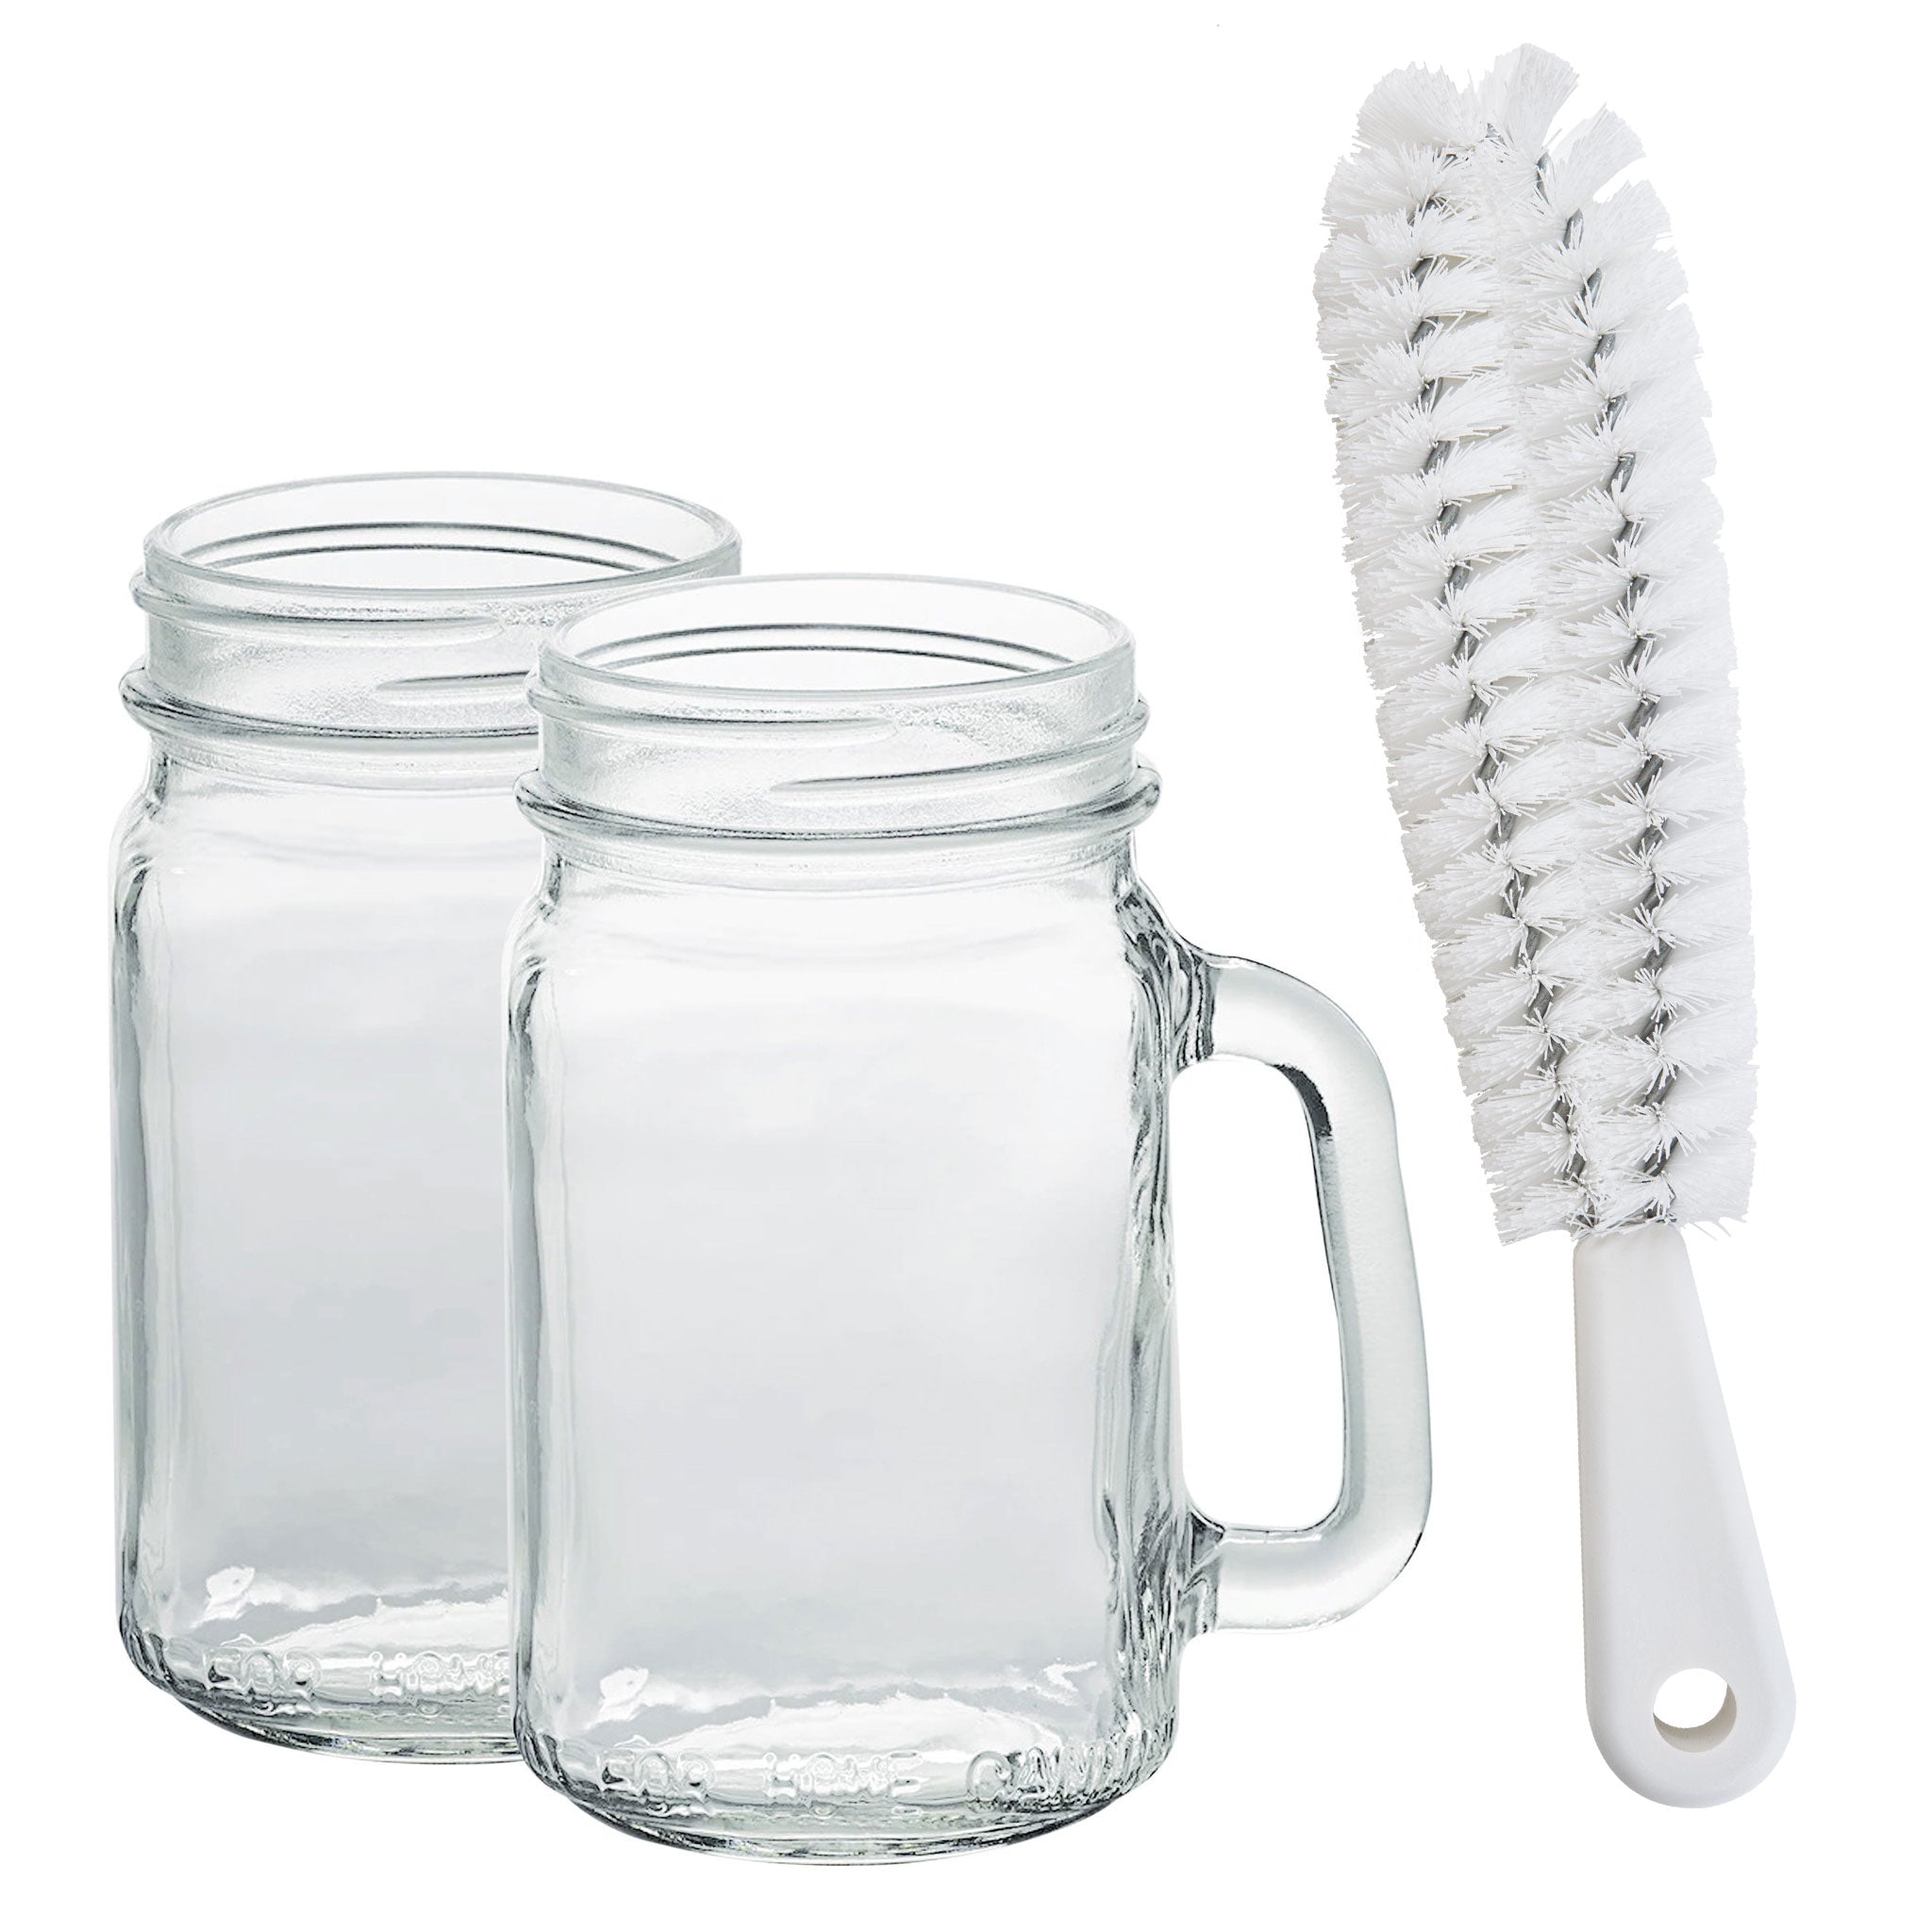 Glass Drinking Mugs, 2-Pack (16 oz) + Extra Large Cleaning Brush